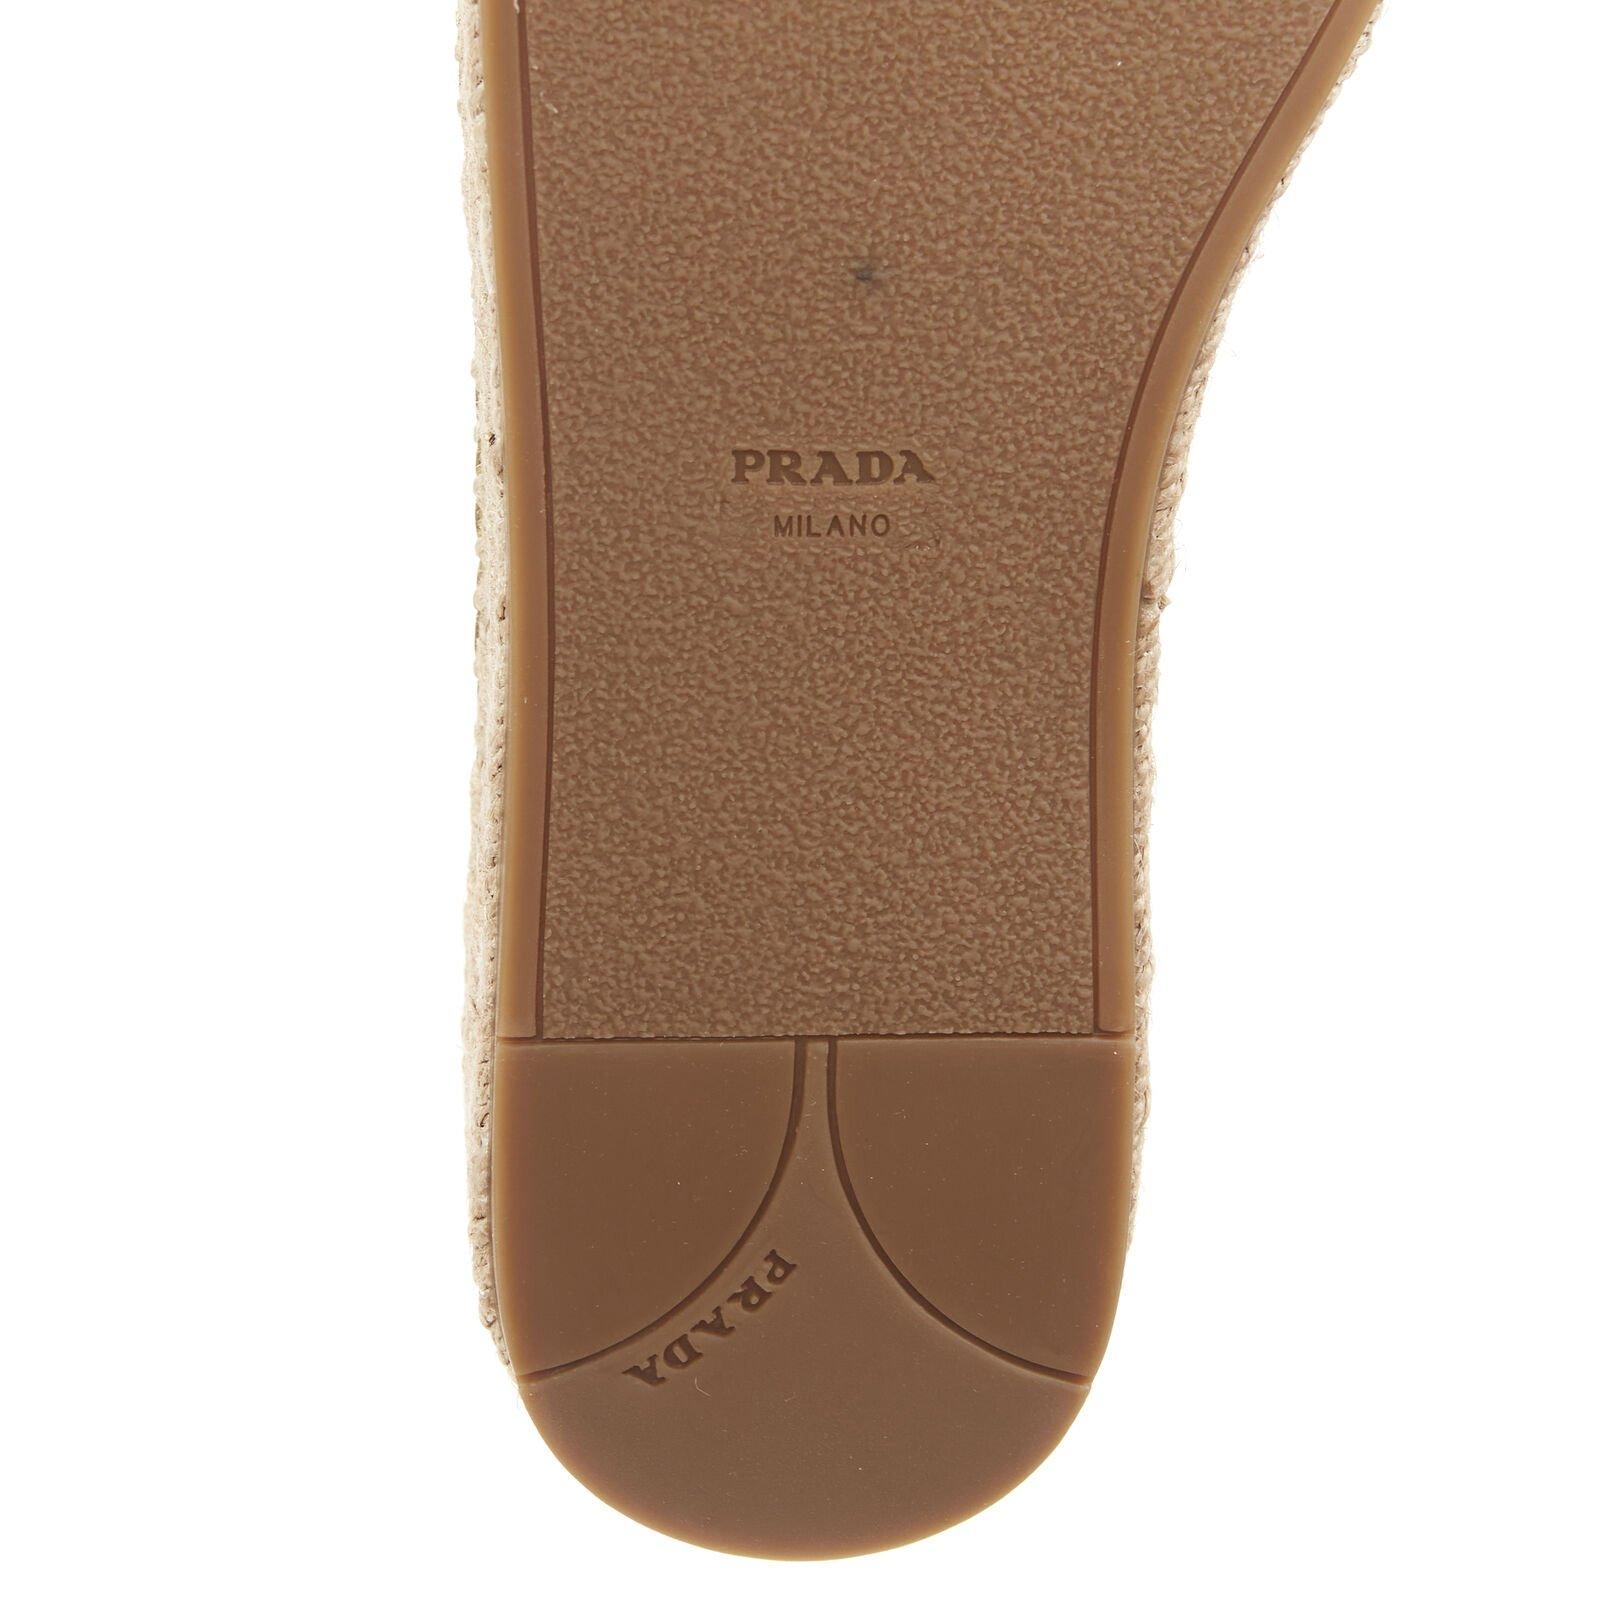 PRADA metallic gold leather logo peep toe jute platform espadrille shoe EU38 For Sale 8